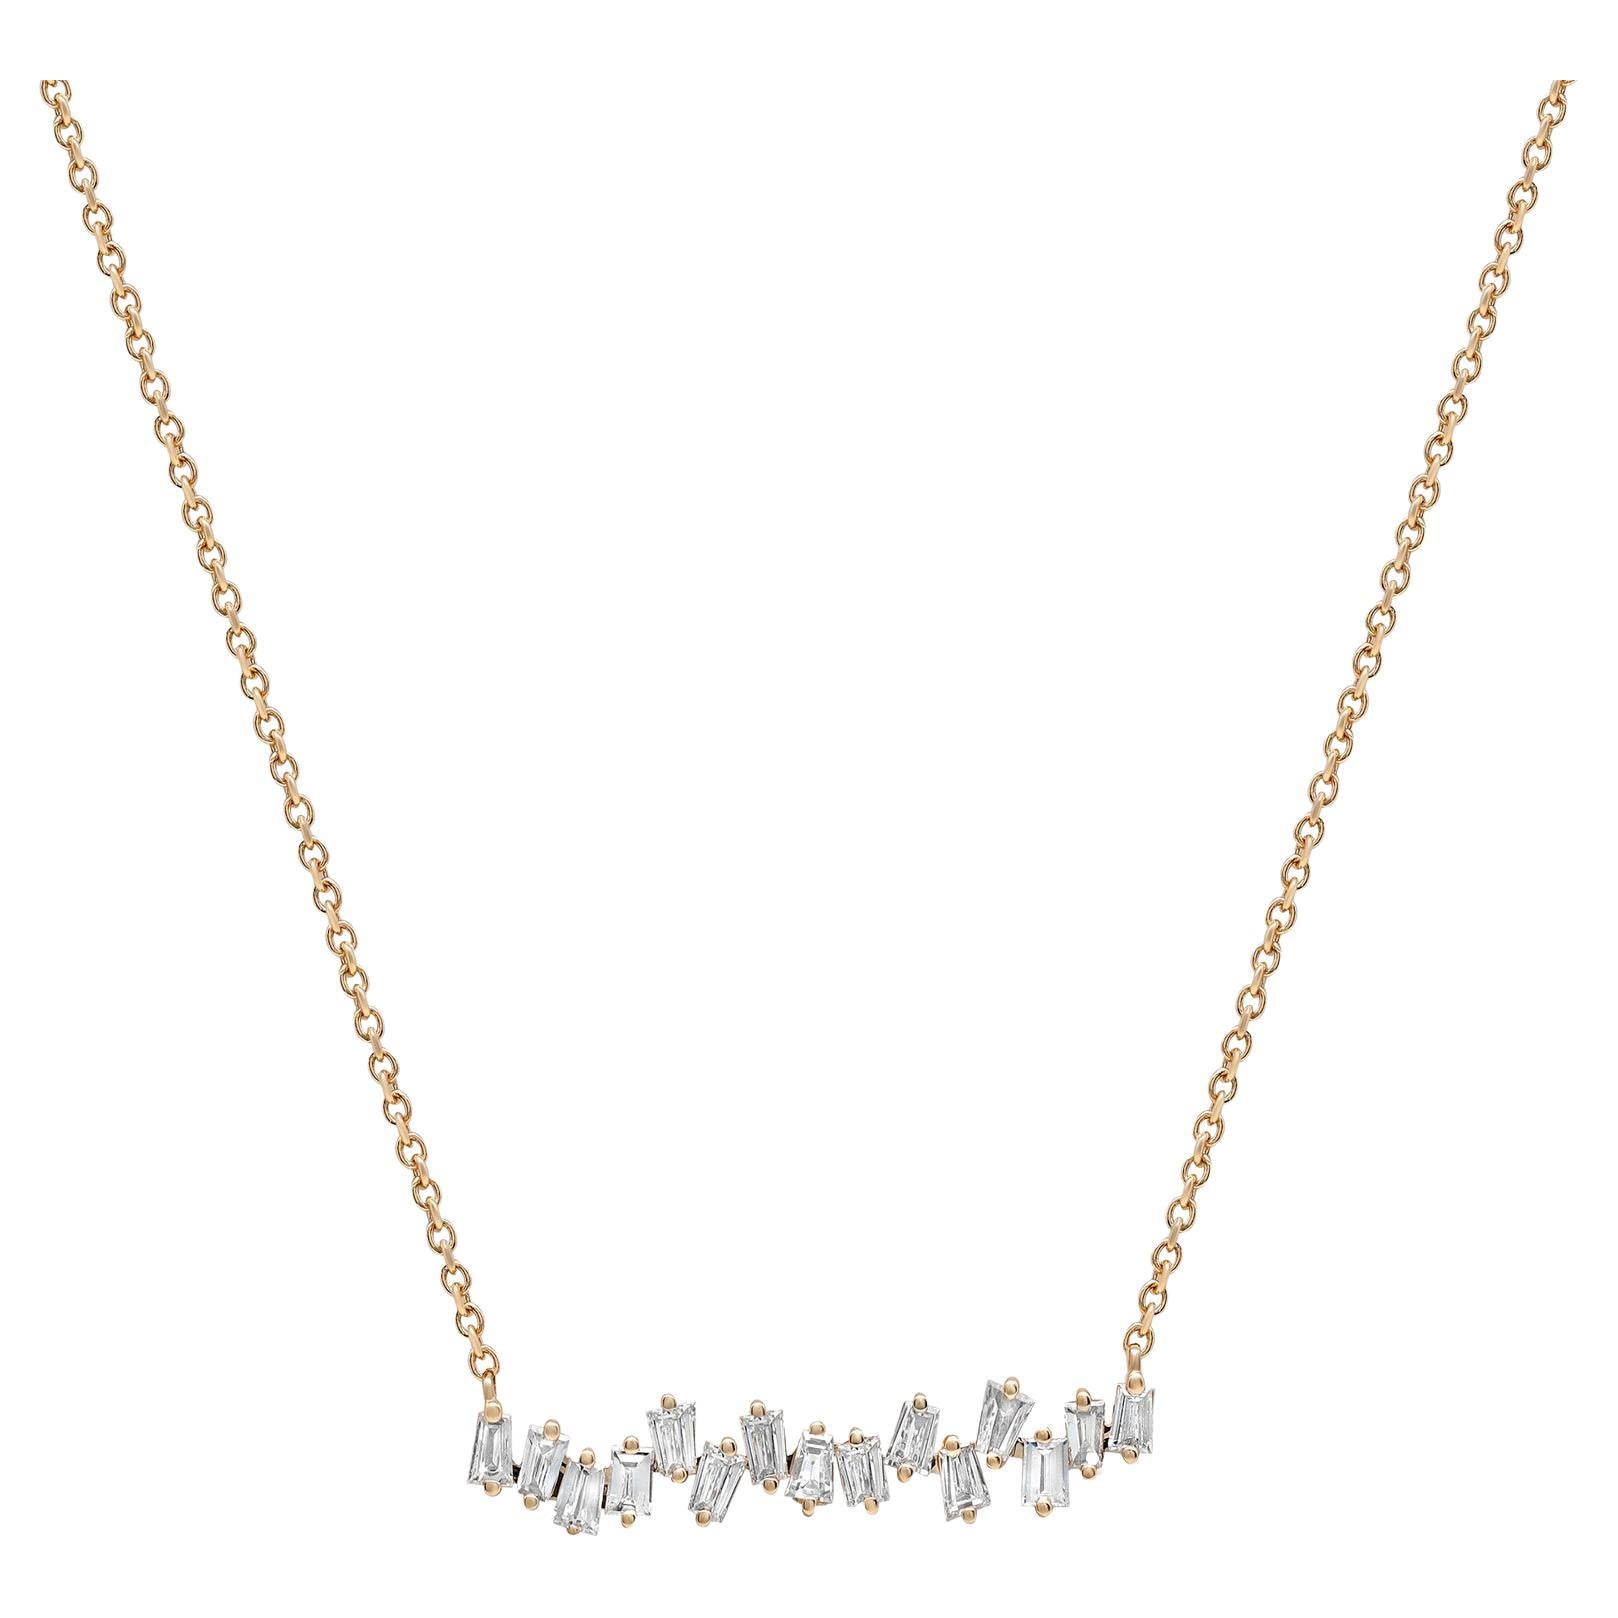 Rachel Koen 1.02cttw Baguette Cut Diamond Cluster Bar Necklace 18K Yellow Gold For Sale